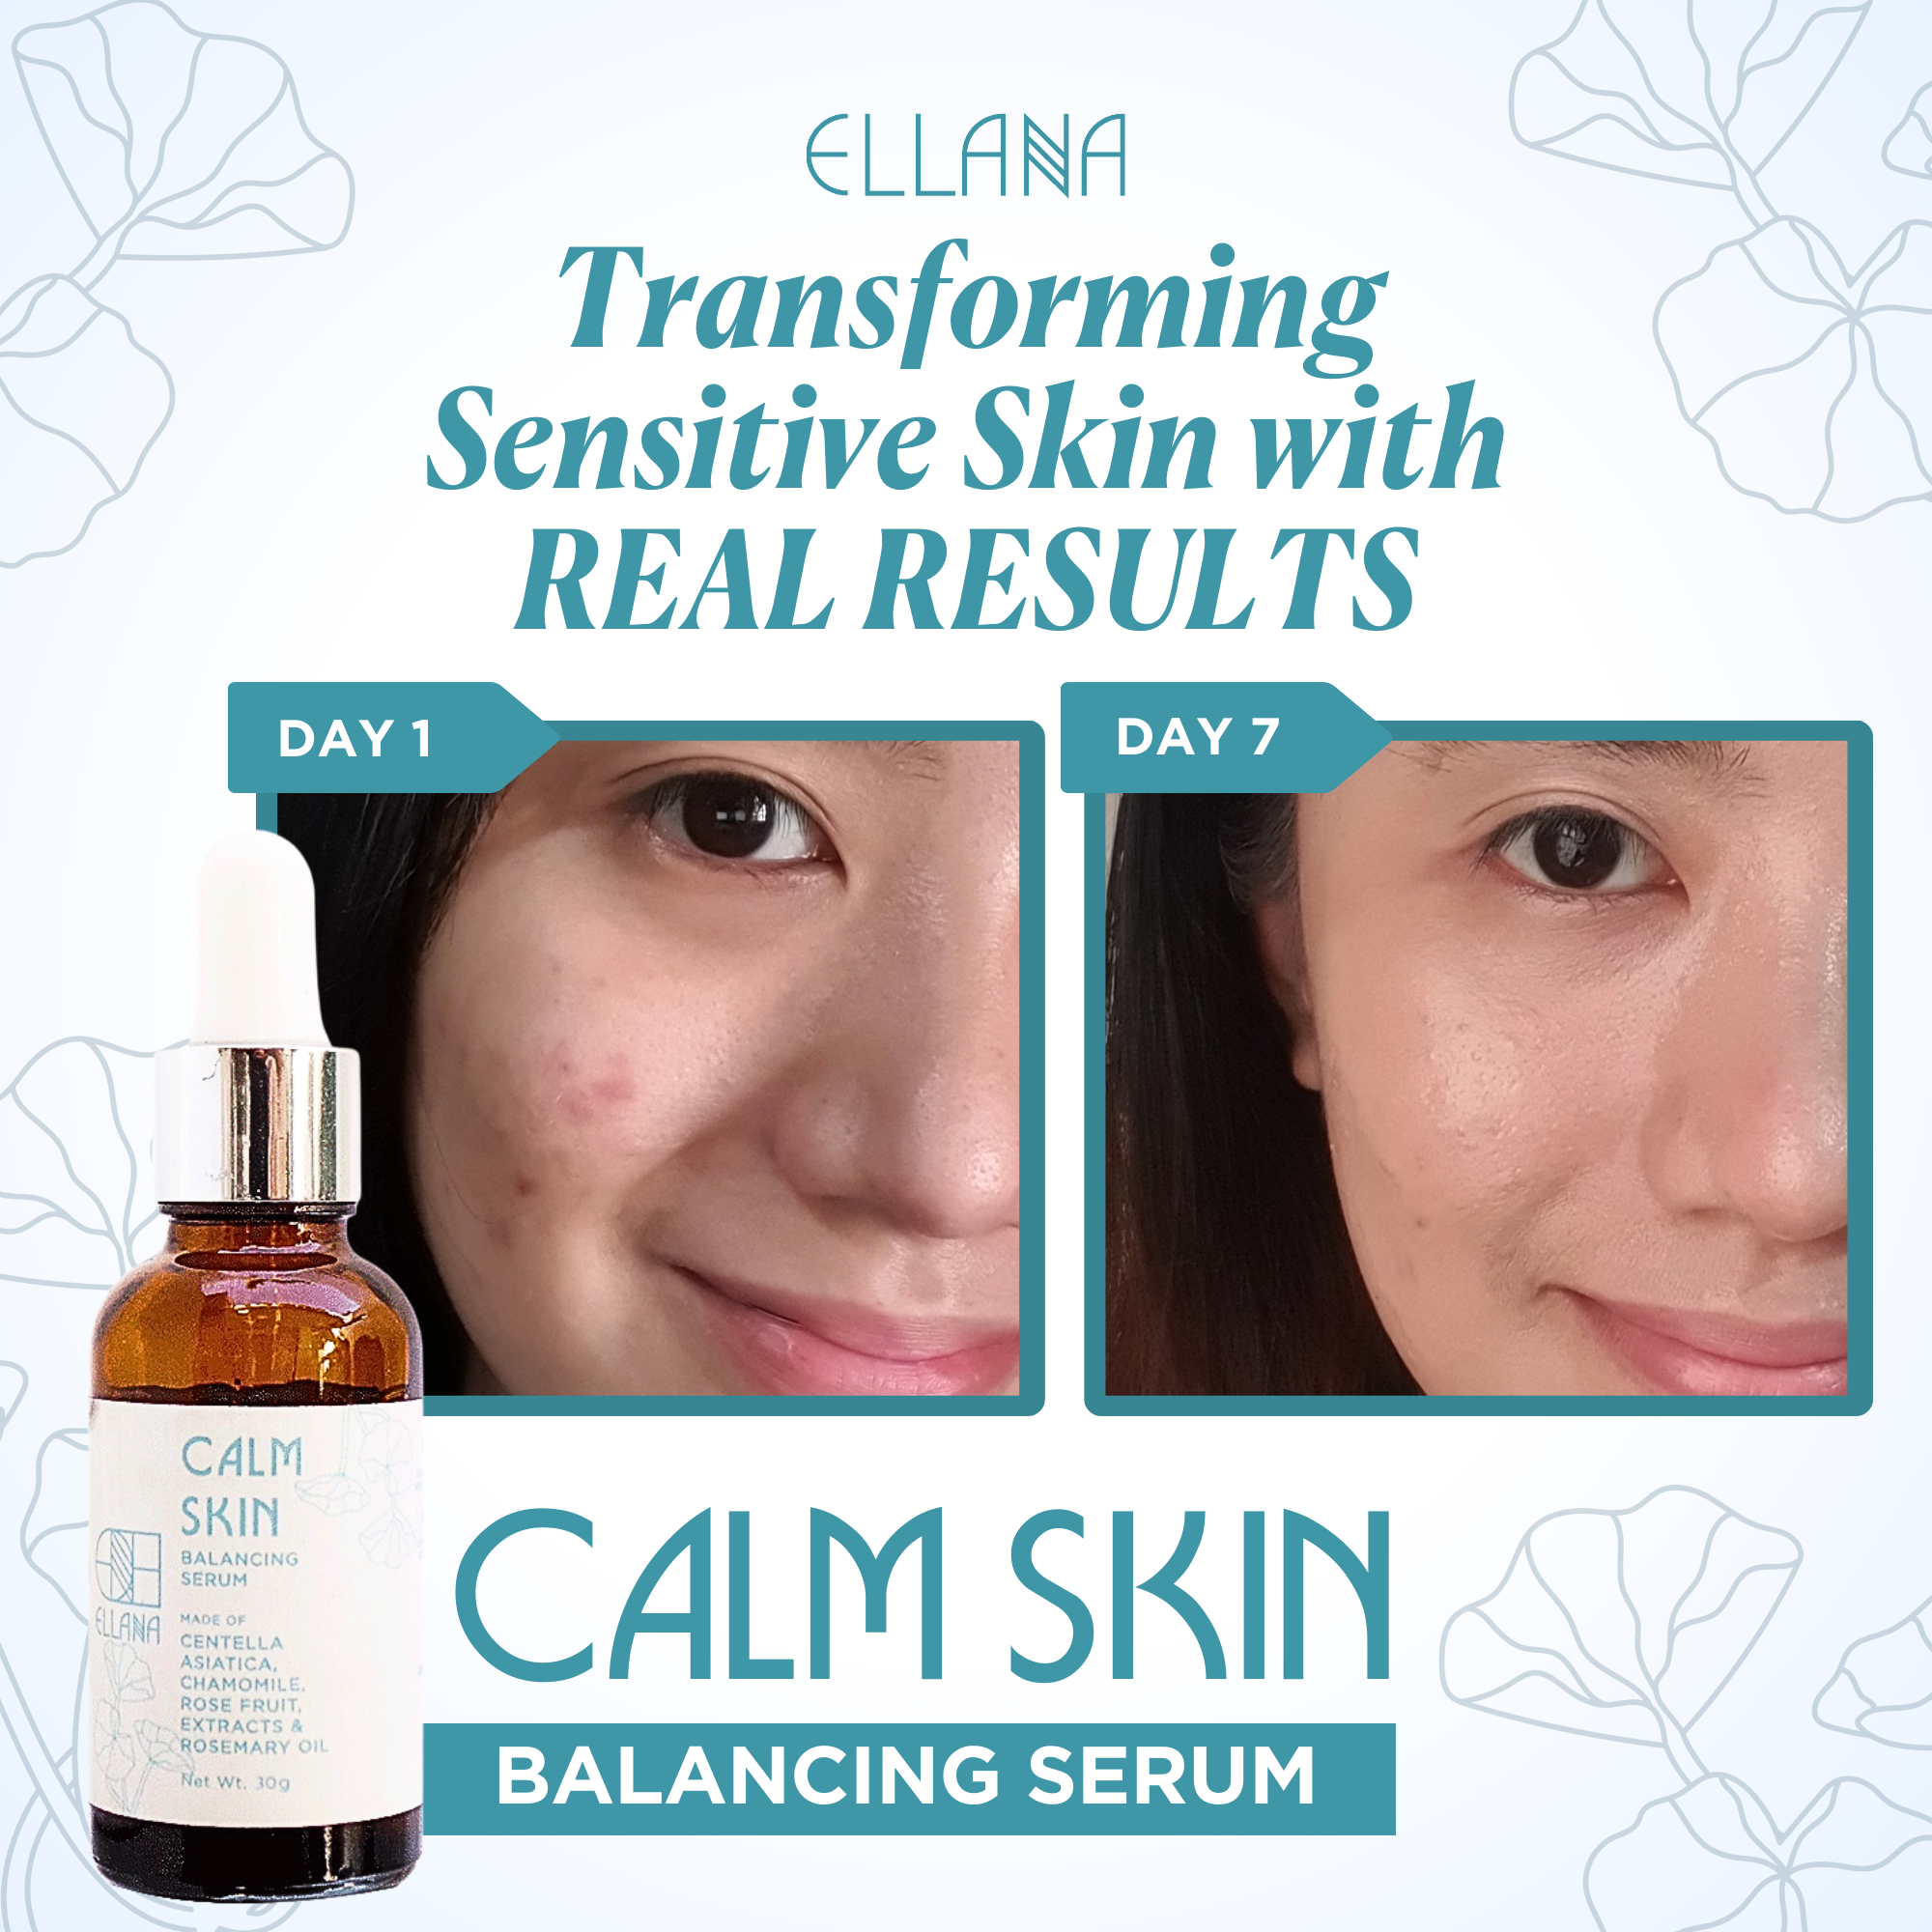 Calm Skin Balancing Serum with Centella Asiatica for Sensitive and Reactive Skin